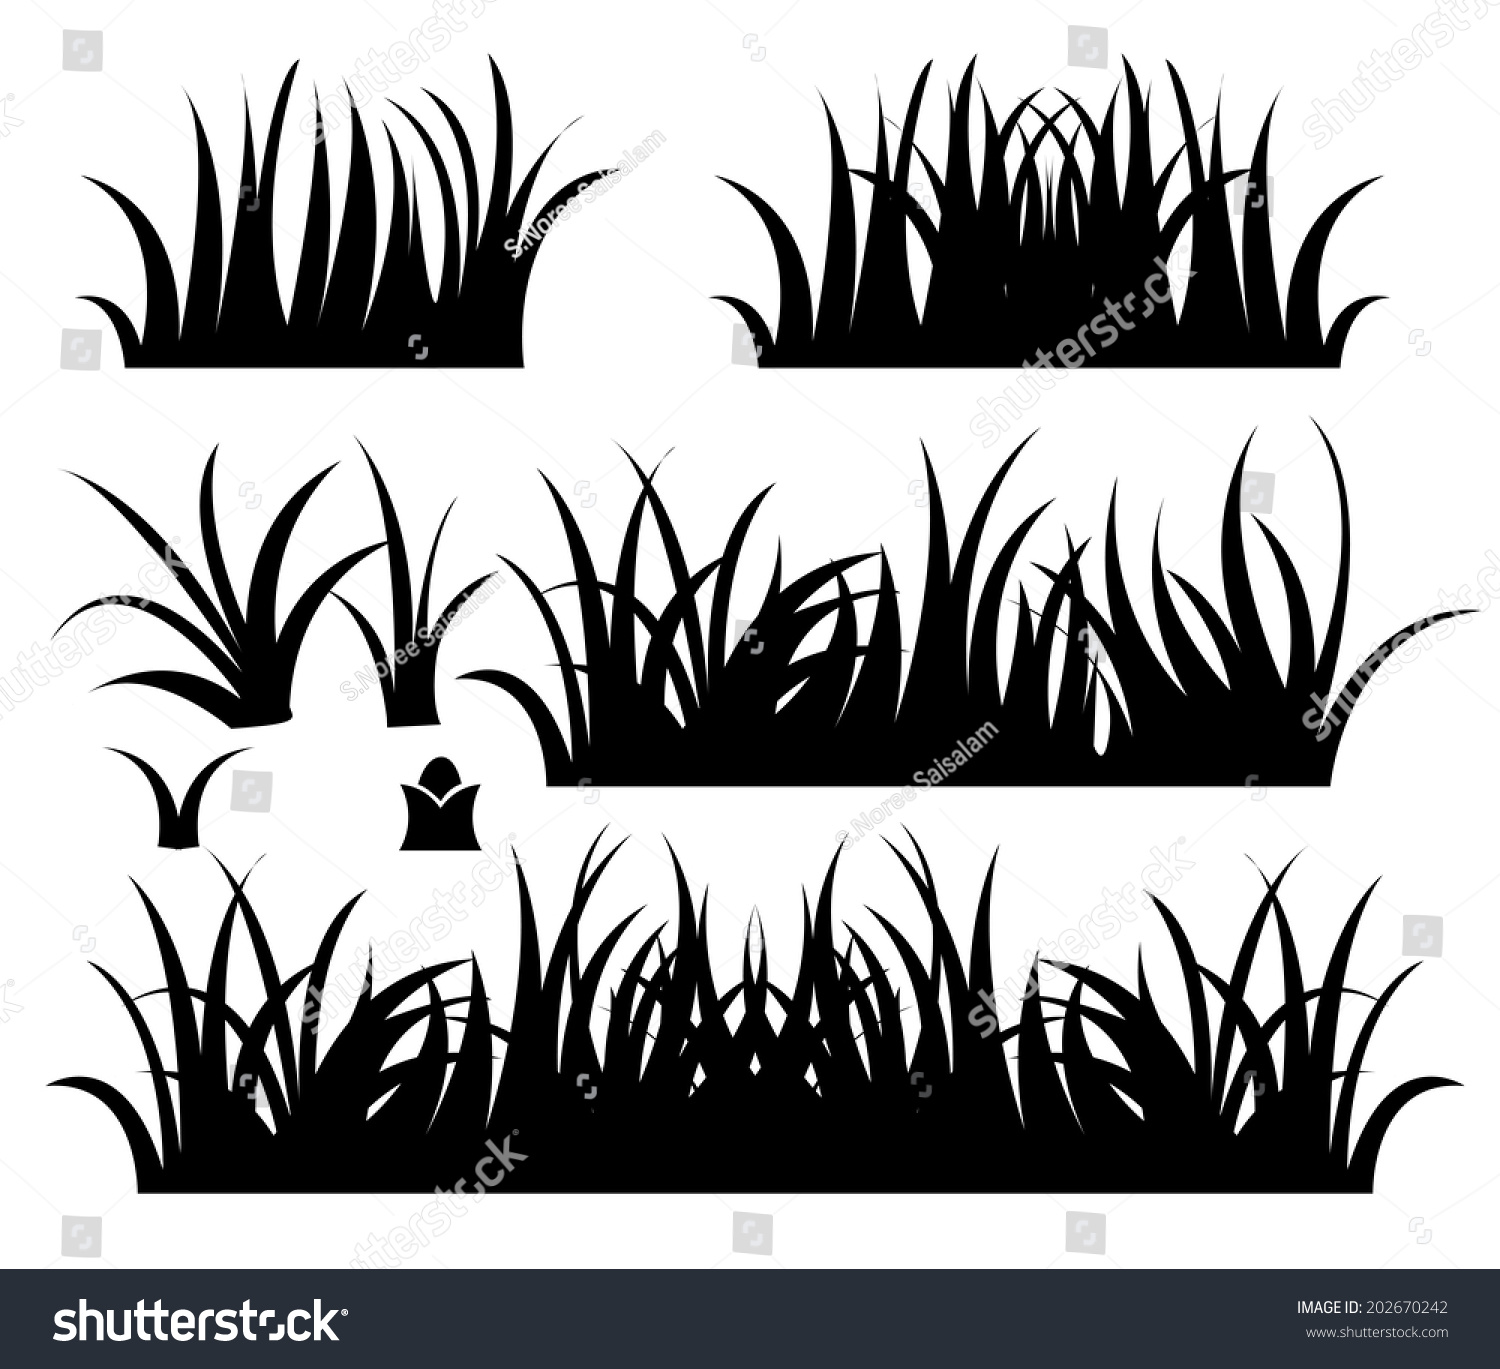 grass silhouette clip art free - photo #48